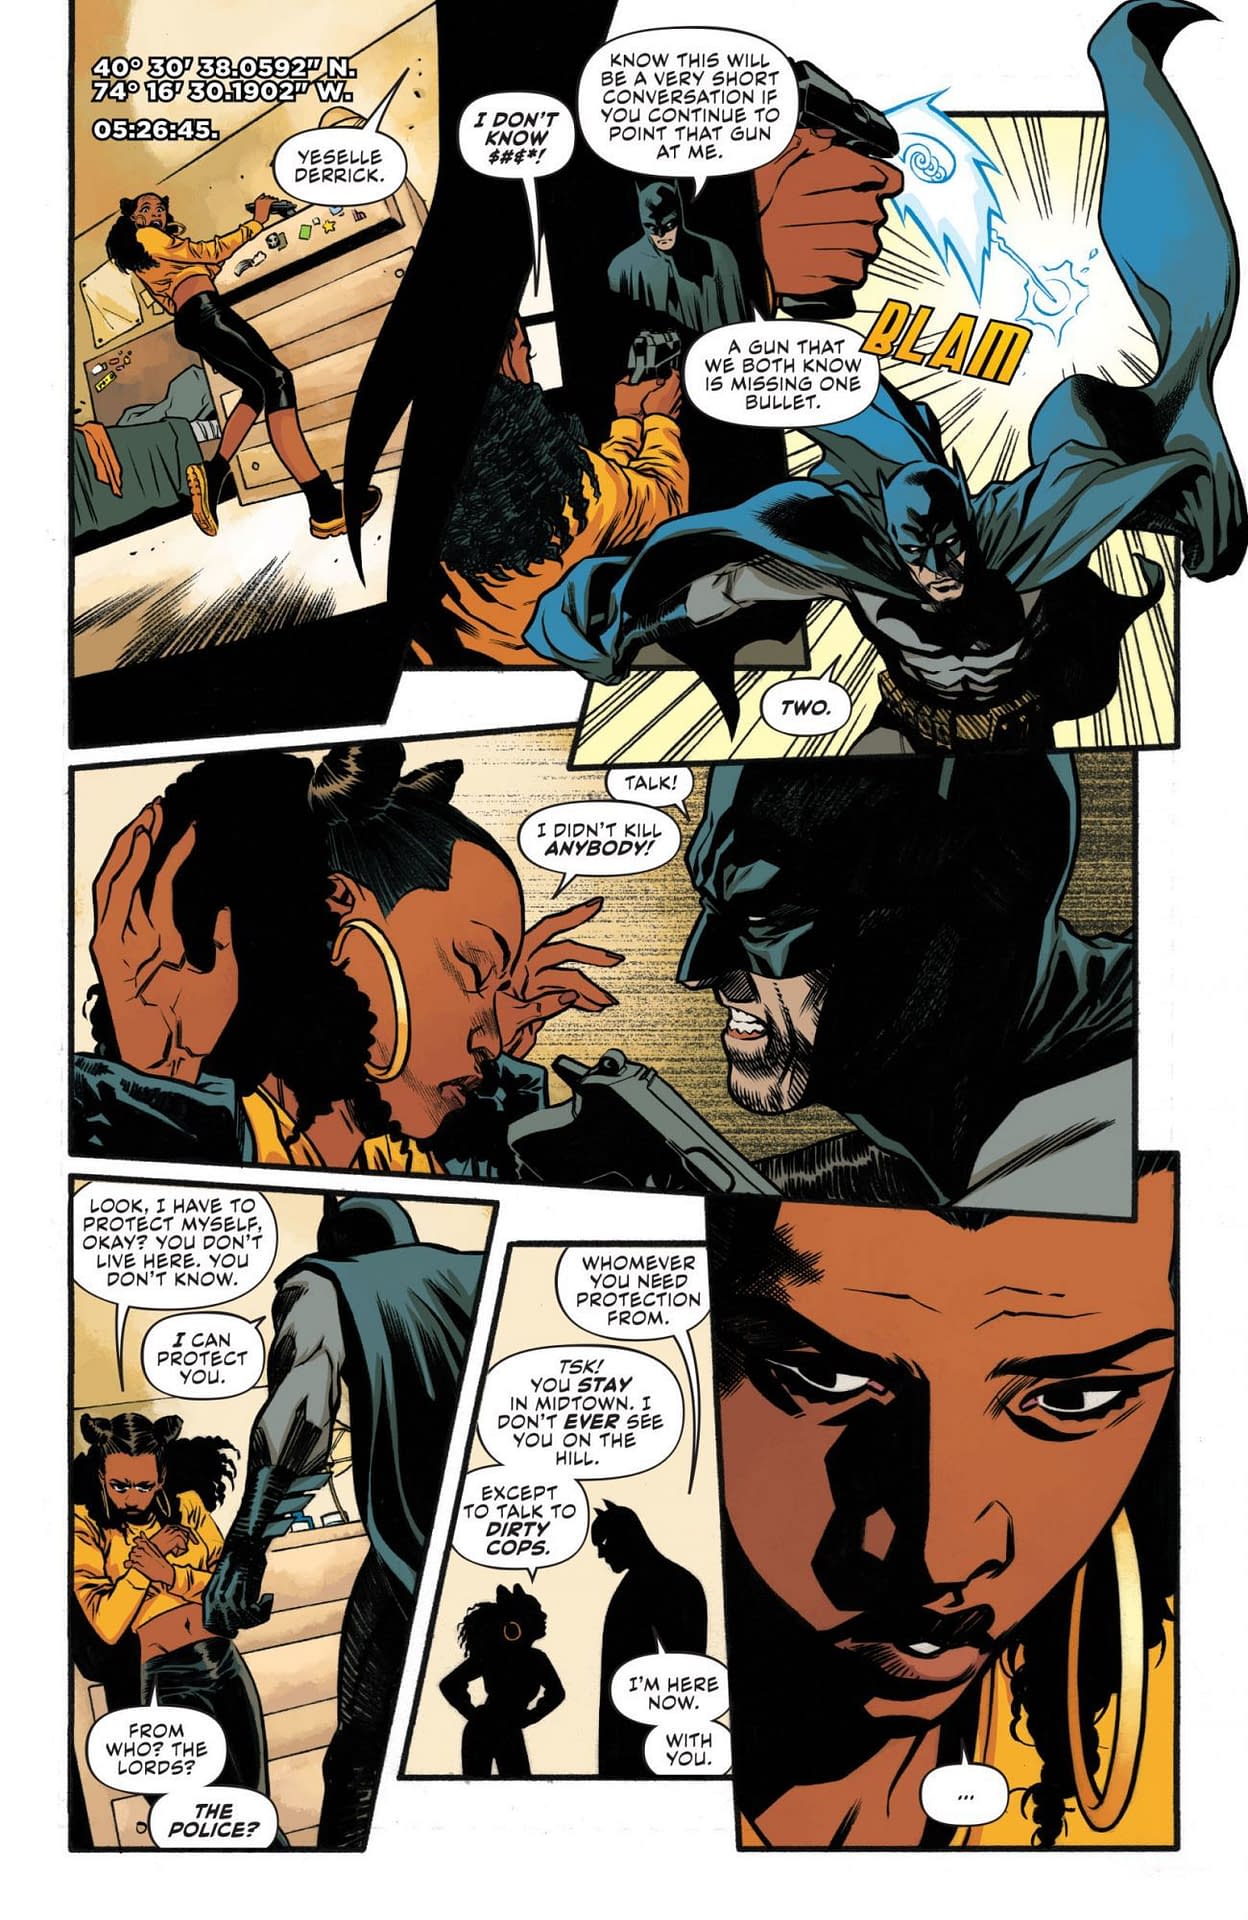 Is Batman Ashamed of Detective Chimp? 9 Pages from Wednesday's Batman Secret Files #1